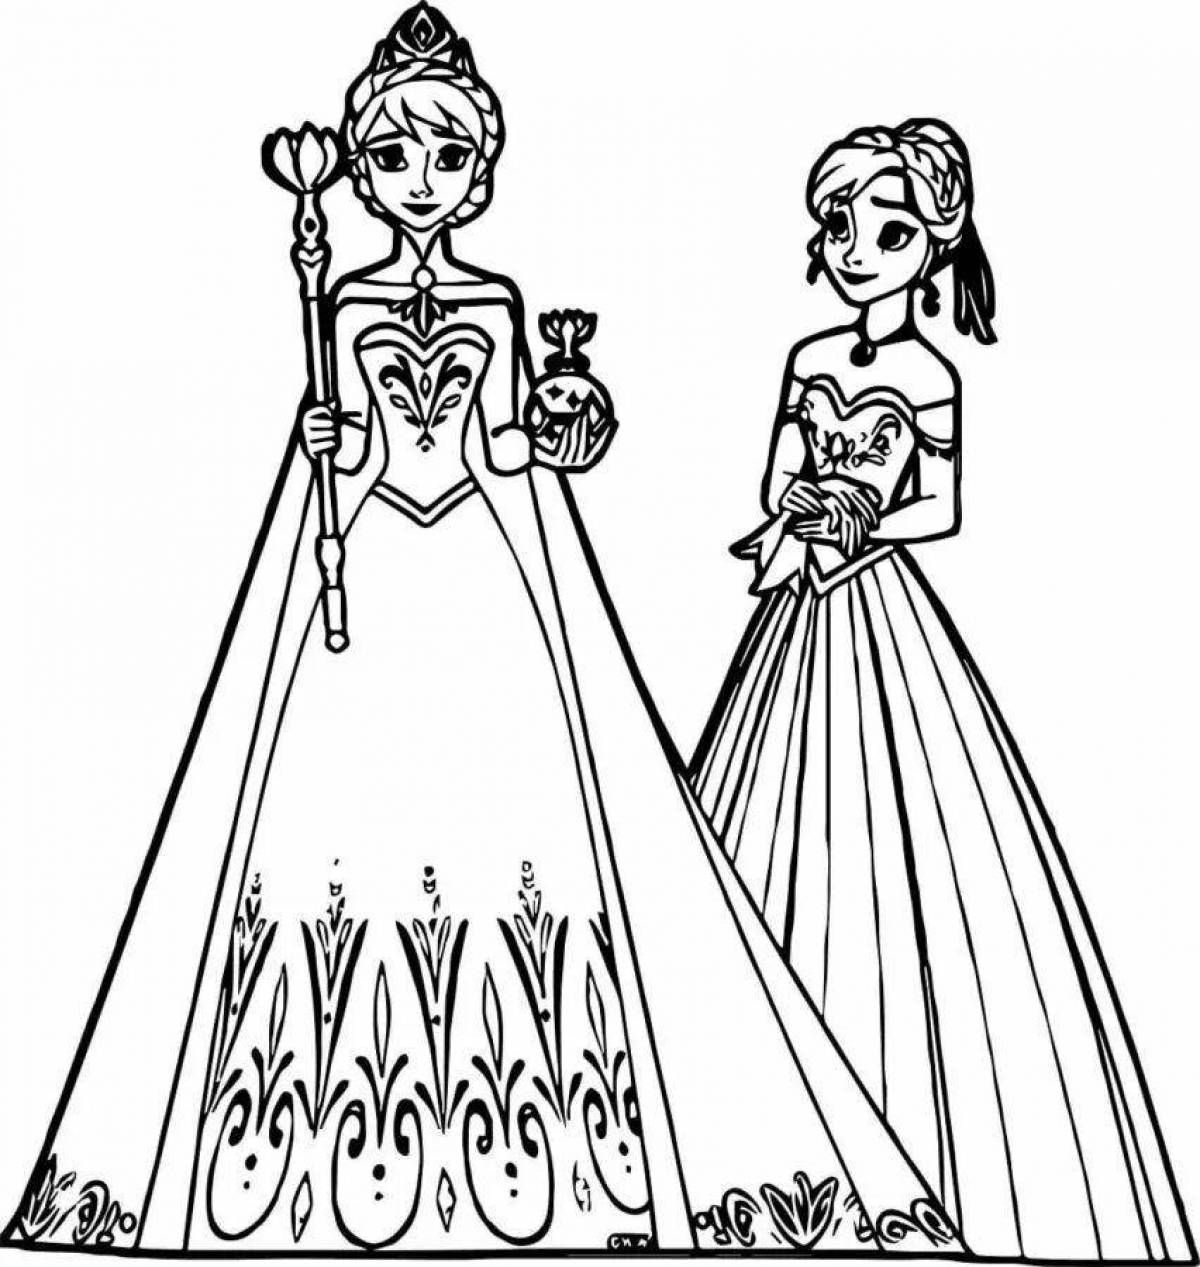 Princess Anna's elegant coloring book